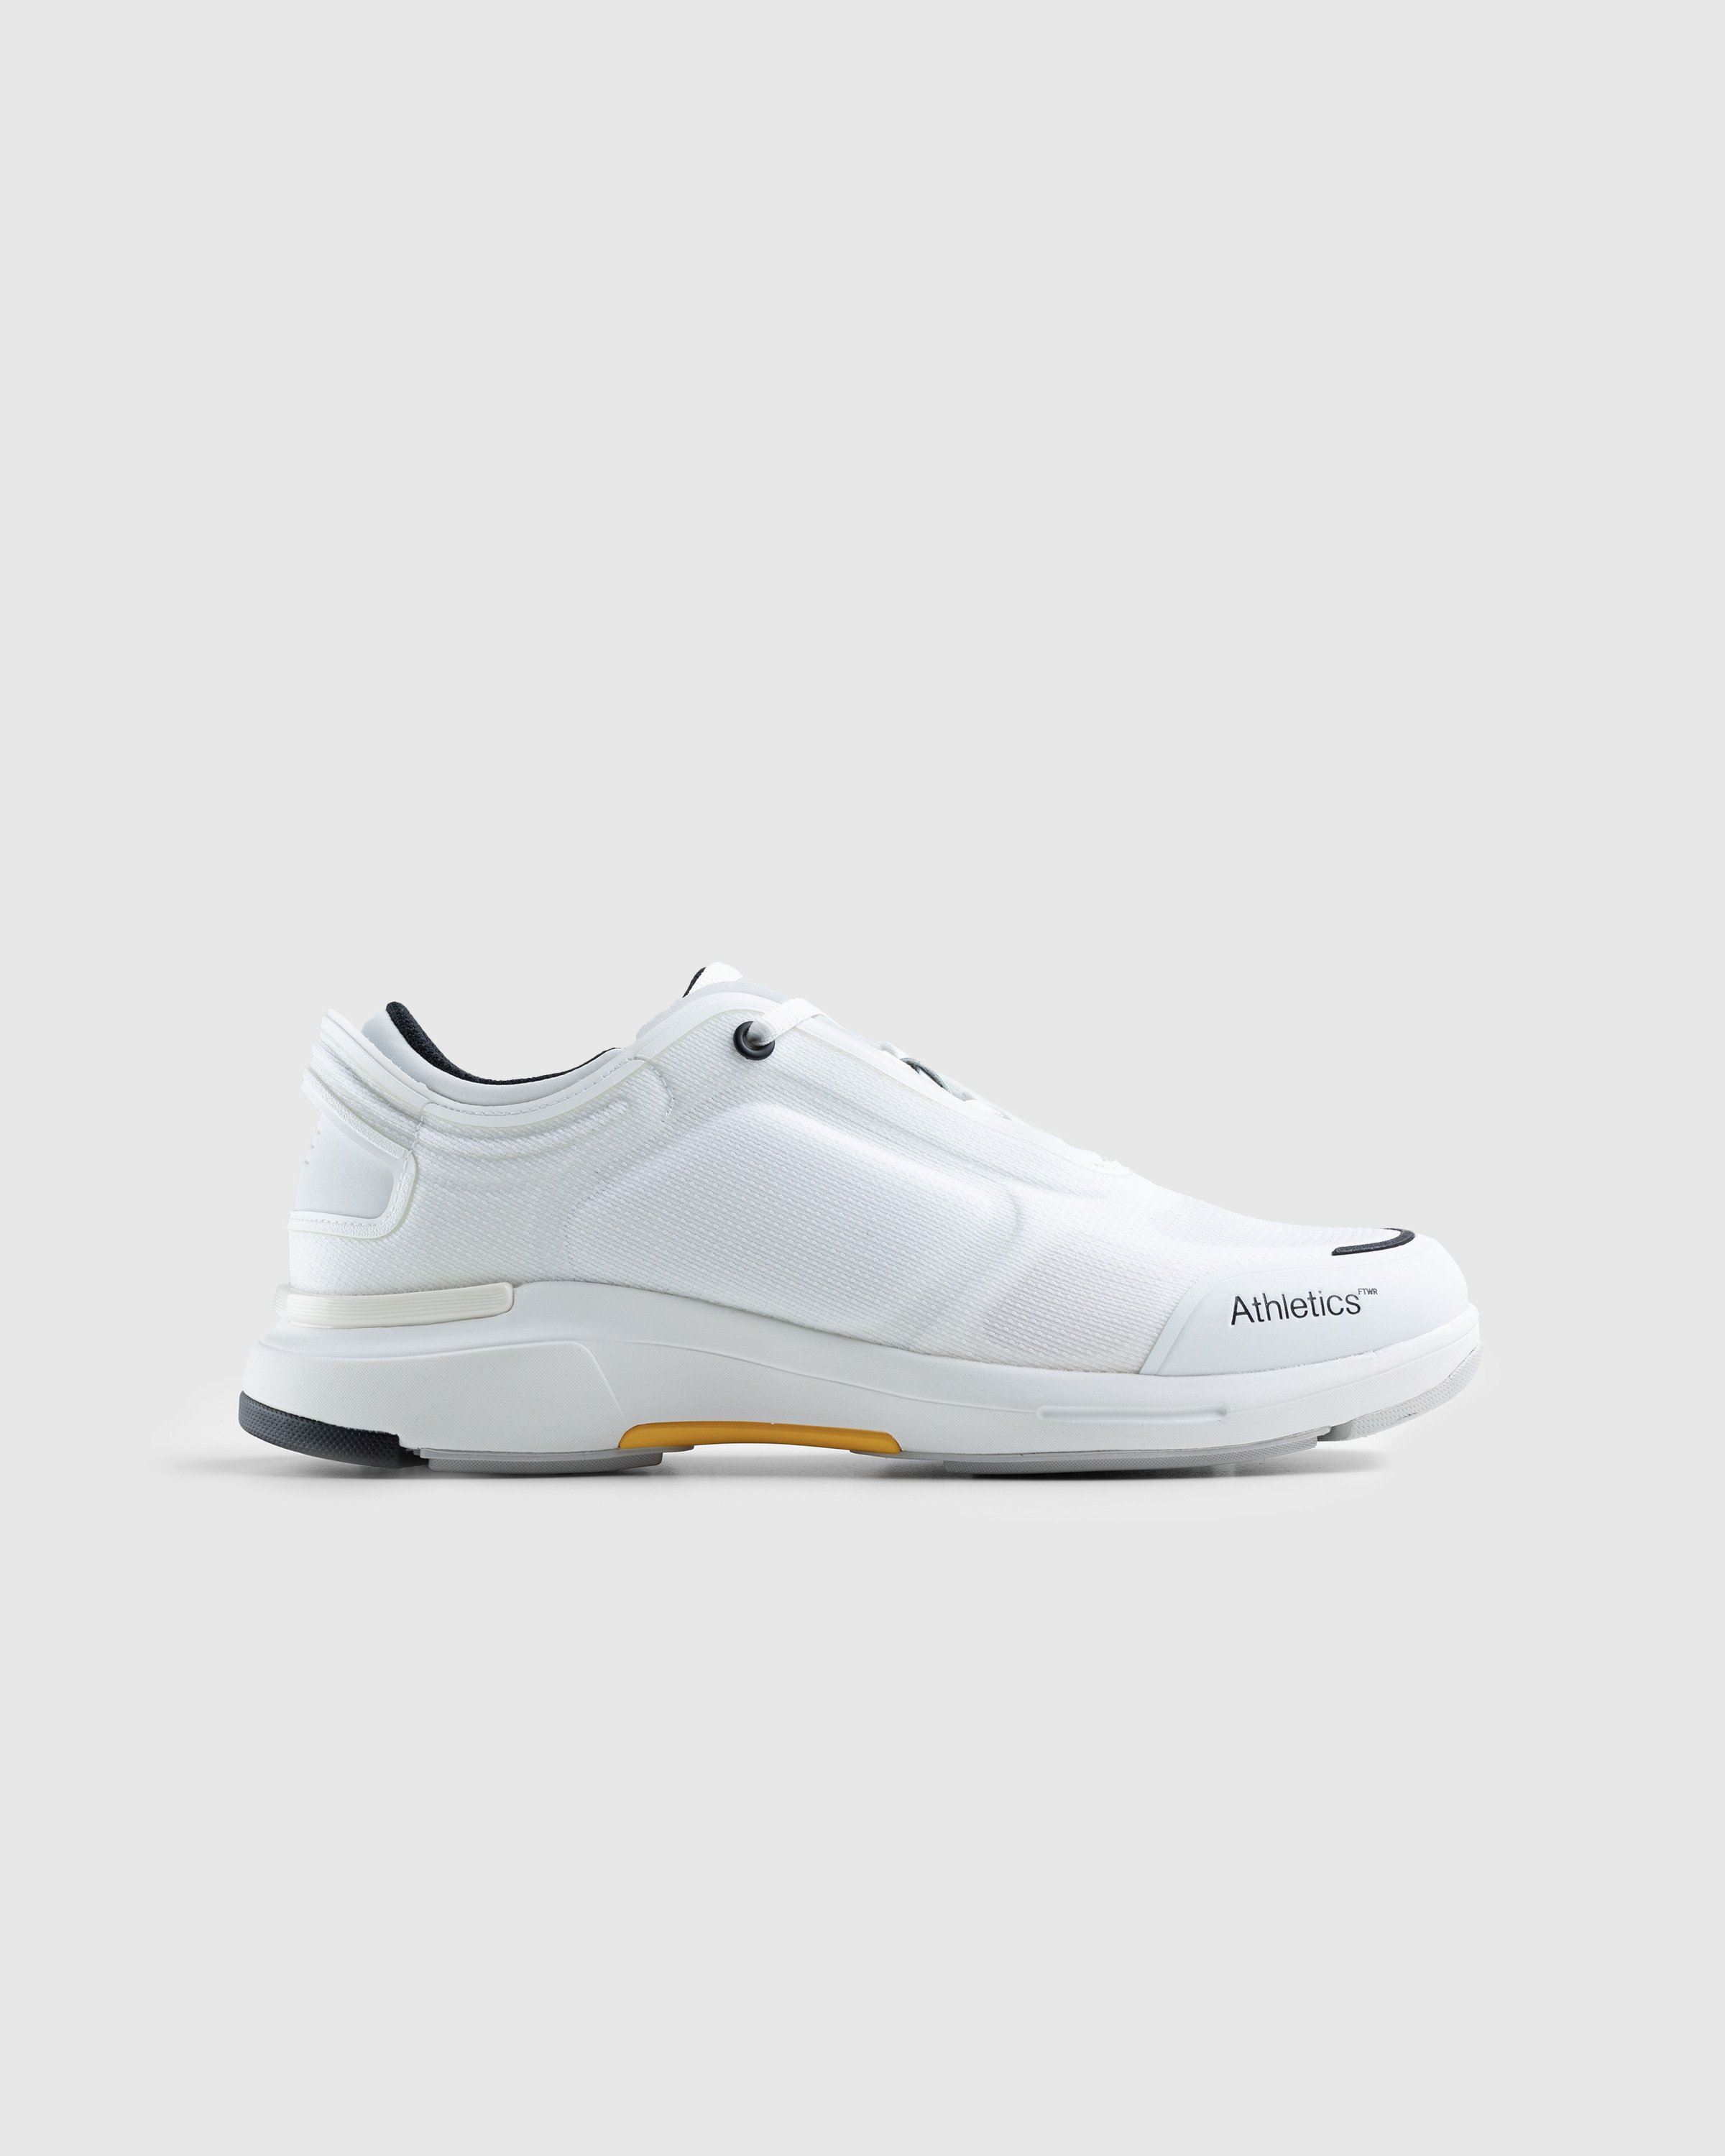 Athletics Footwear - One White - Footwear - White - Image 1